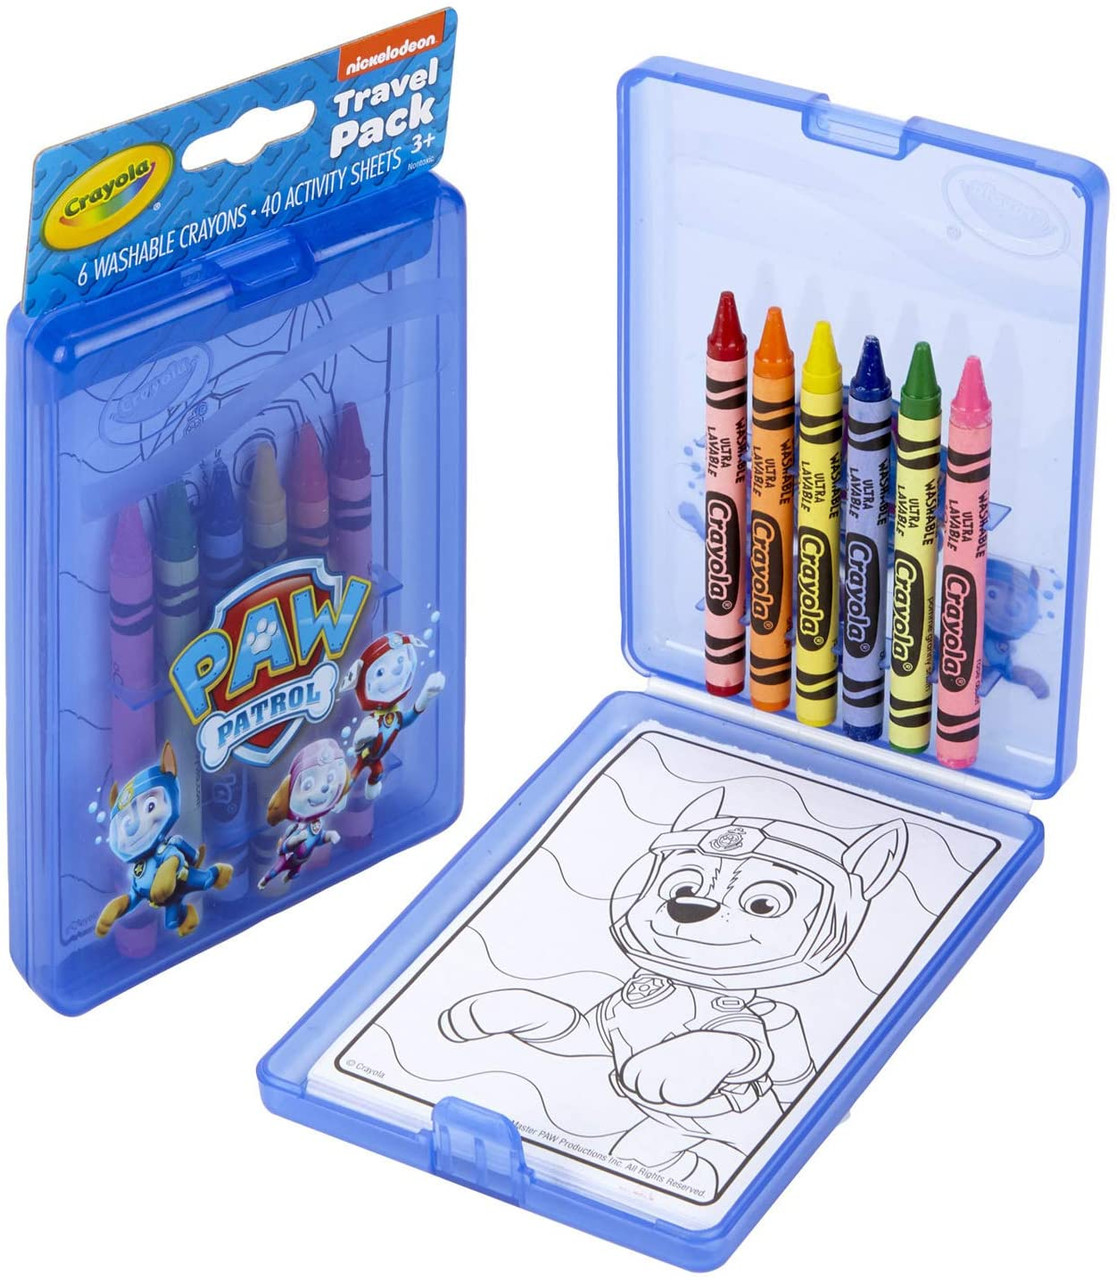 Crayola Color Wonder Paw Patrol Coloring Book Travel Coloring Kit Gift for Kids 3 4 5 6